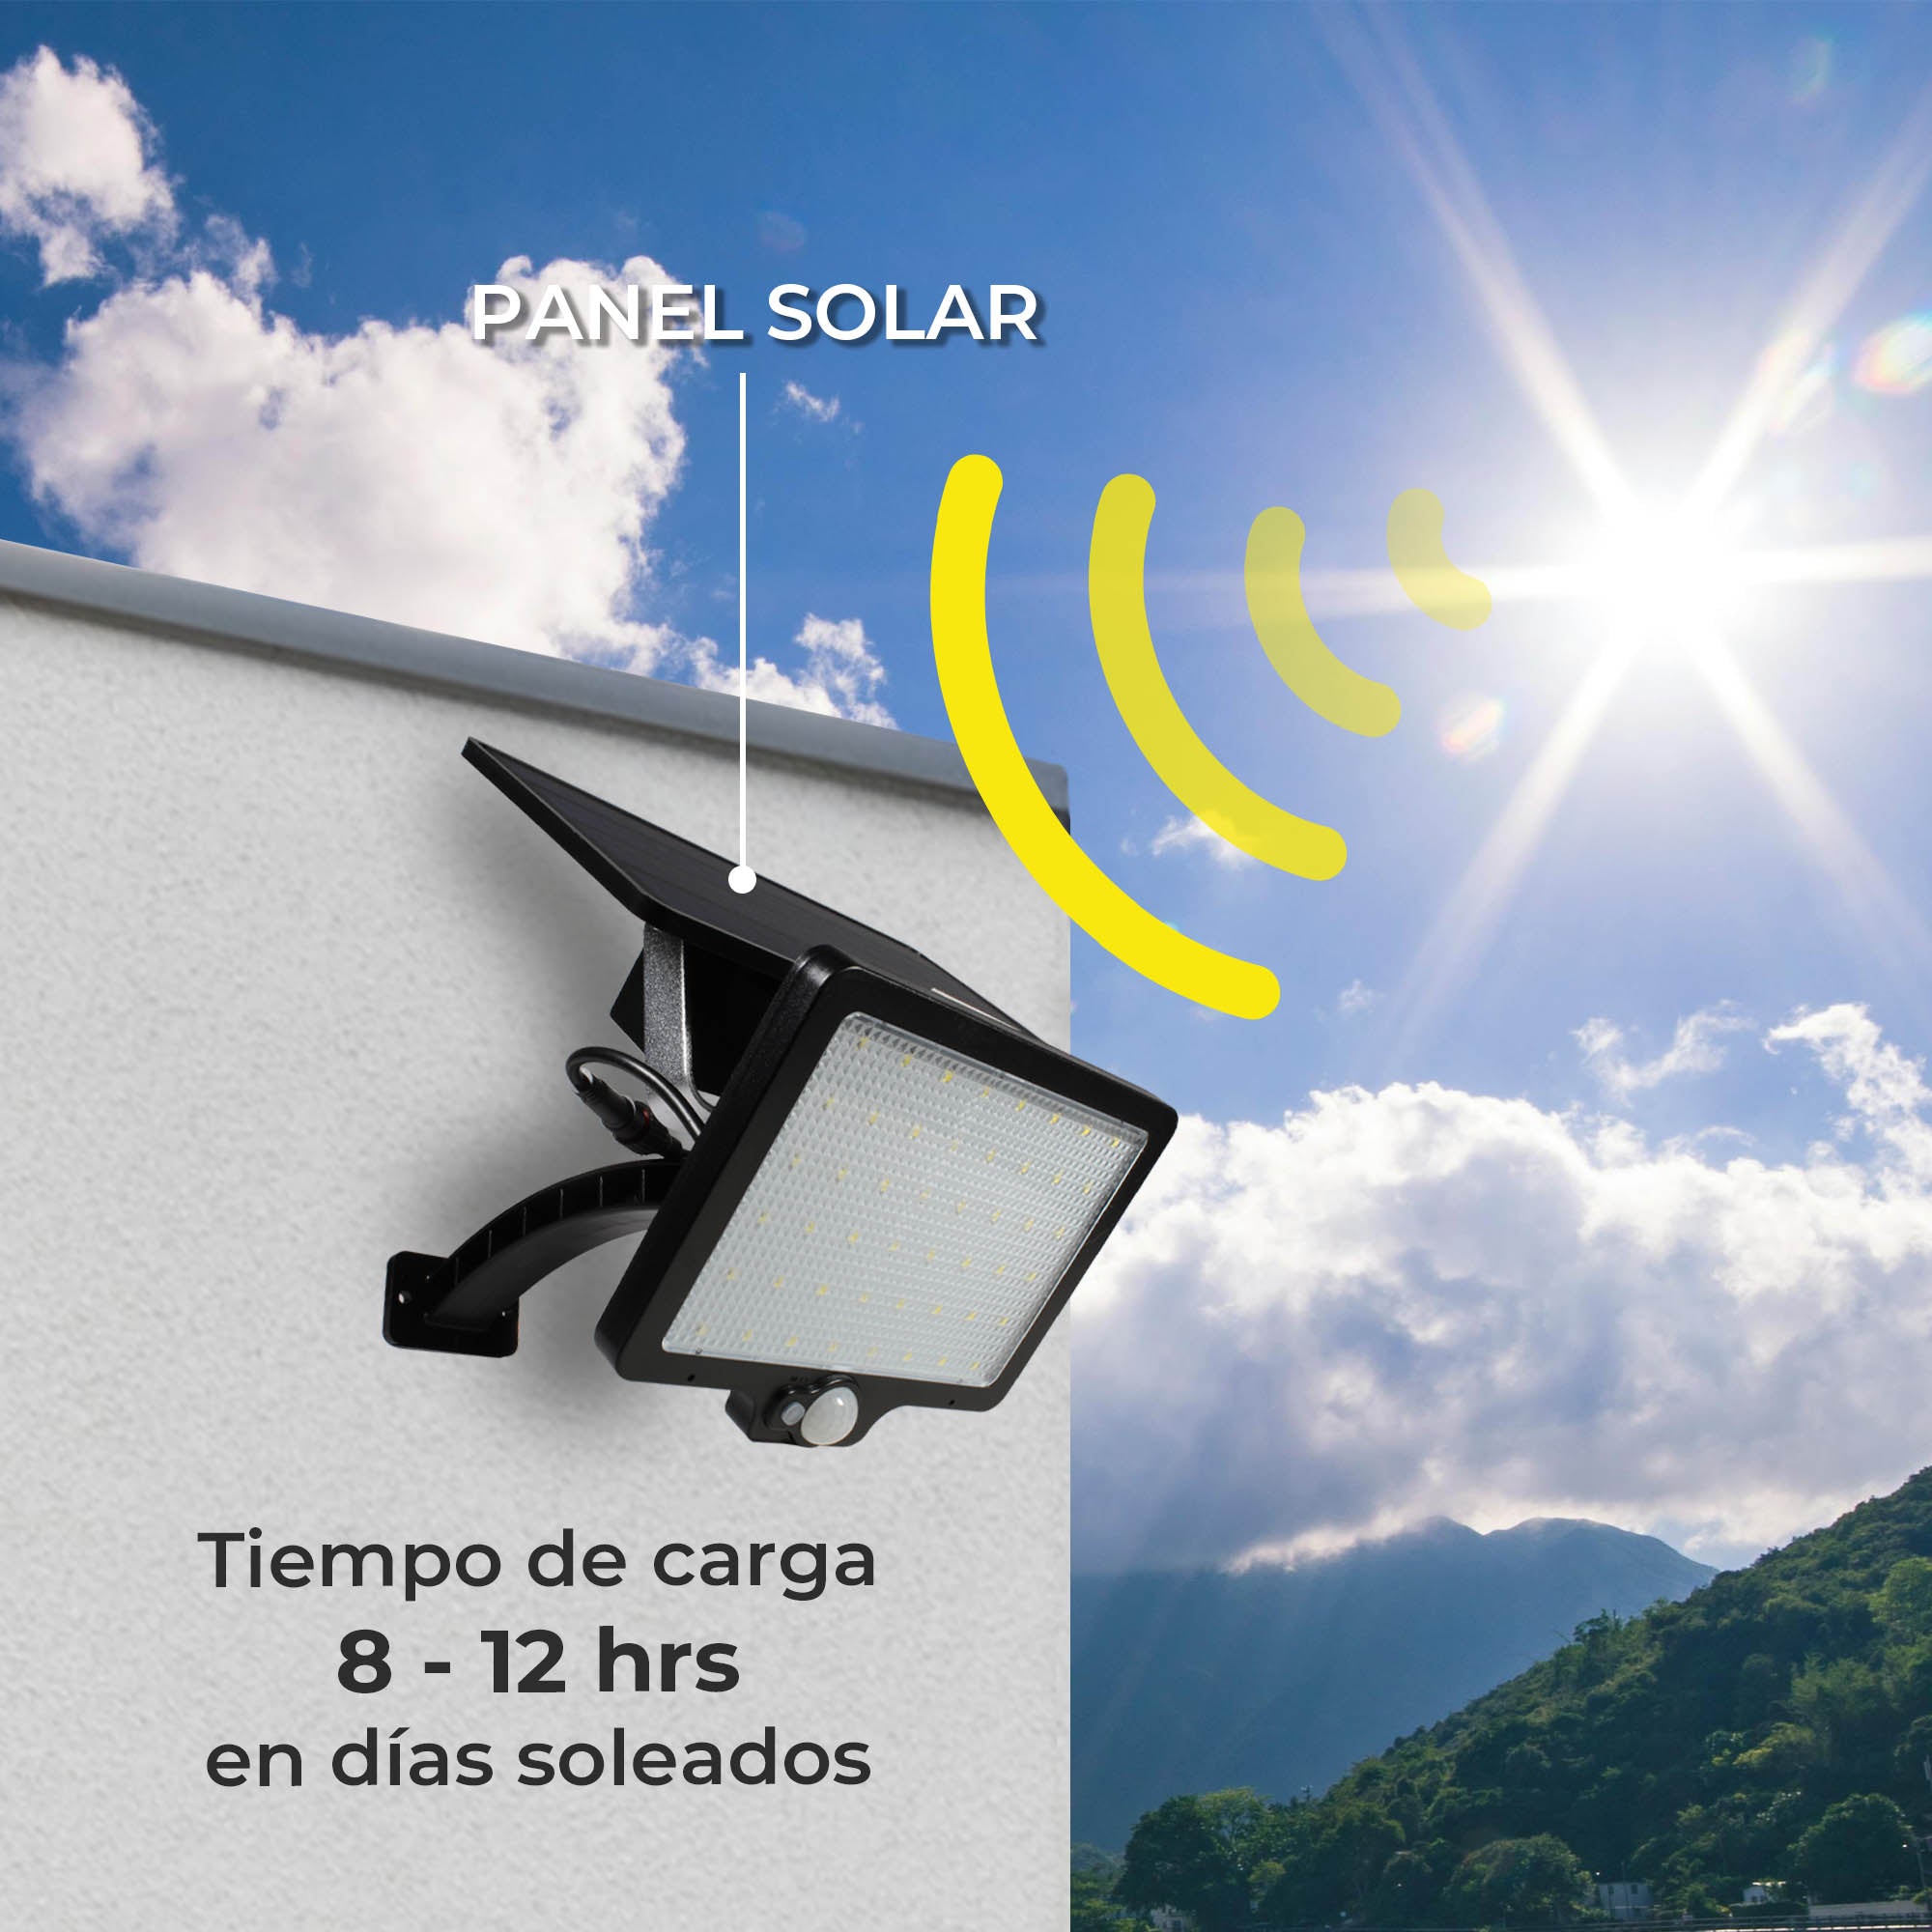 Luminaria LED Solar con Sensor de Movimiento, Modelo MS-4706.N60 Dekor